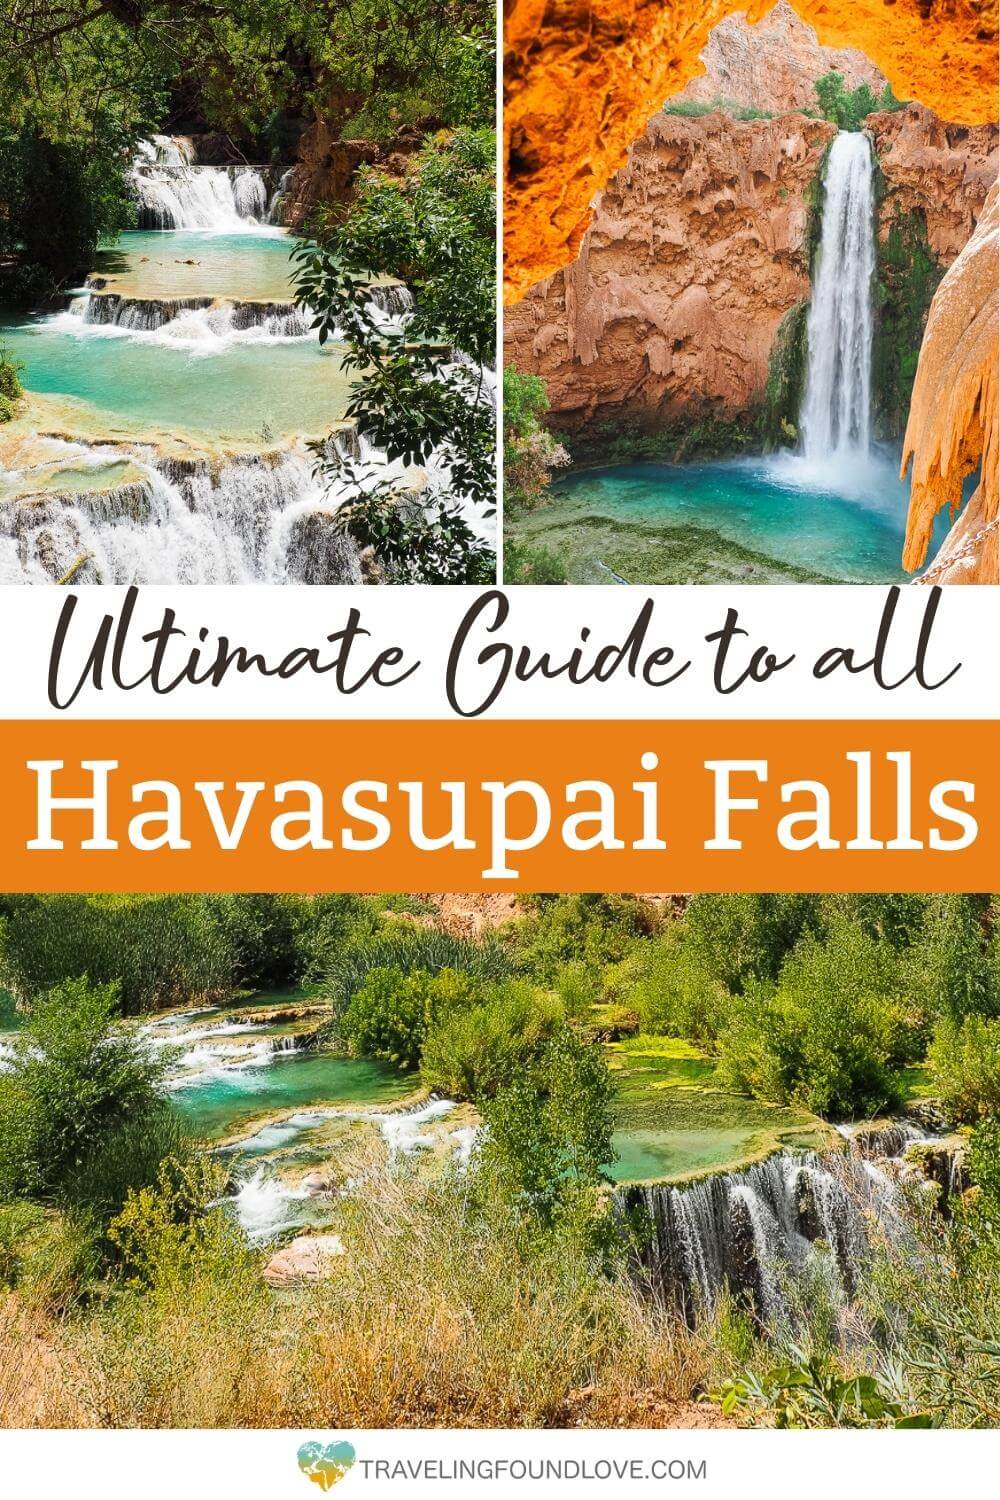 Pinterest Pin of Havasu Falls, Beaver Falls, and Fifty Foot Falls